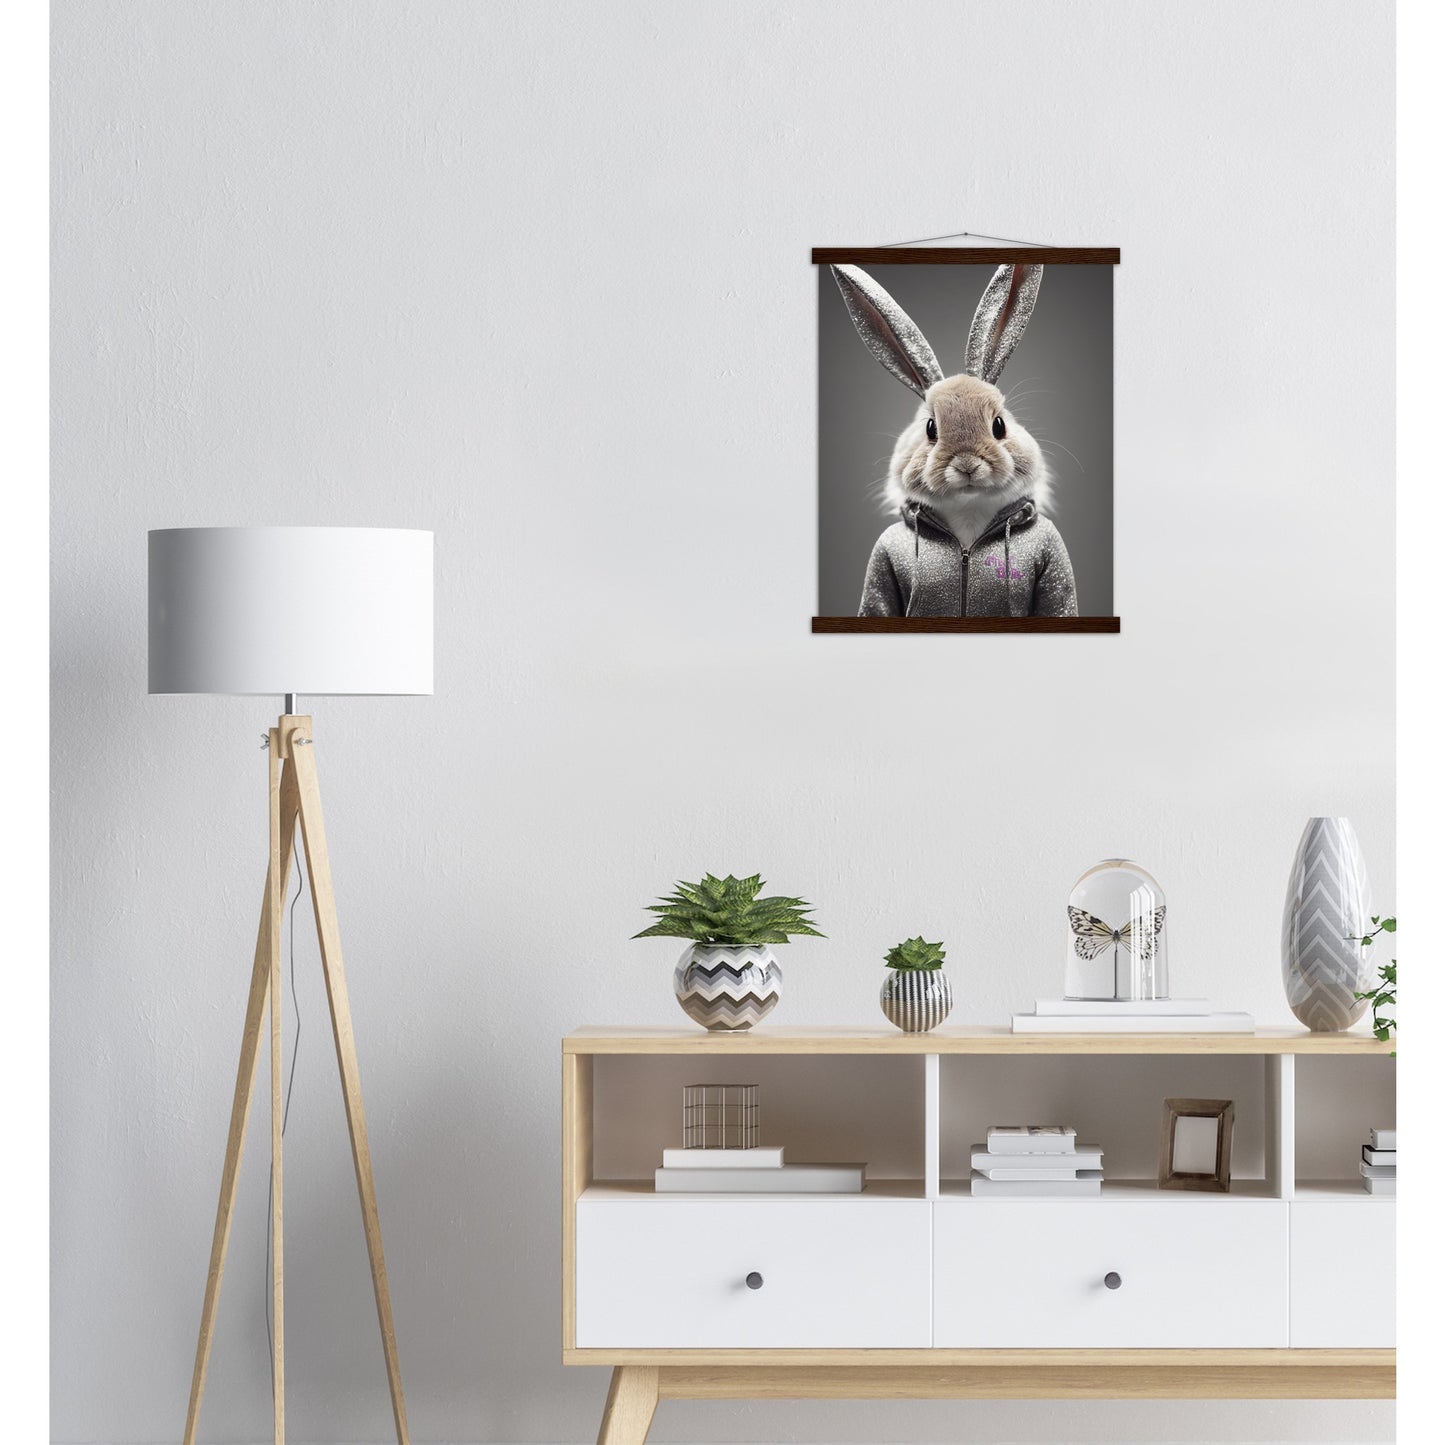 Poster mit Leisten (Holz) - in Museumsqualität - Bunny in grey tracksuit - "Cleo" - Cute - Marke:Pixelboys - Brand - Art Prints - Marke - Wandkunst - Papierstärke: 250g/qm - Wall Art - Bunny crey - Skater Betty - Hasen Gang - Original - Künstler:Pixelboys - Poster with frame - Office Poster - Trend - Wandschmuck - Atelier USA - 